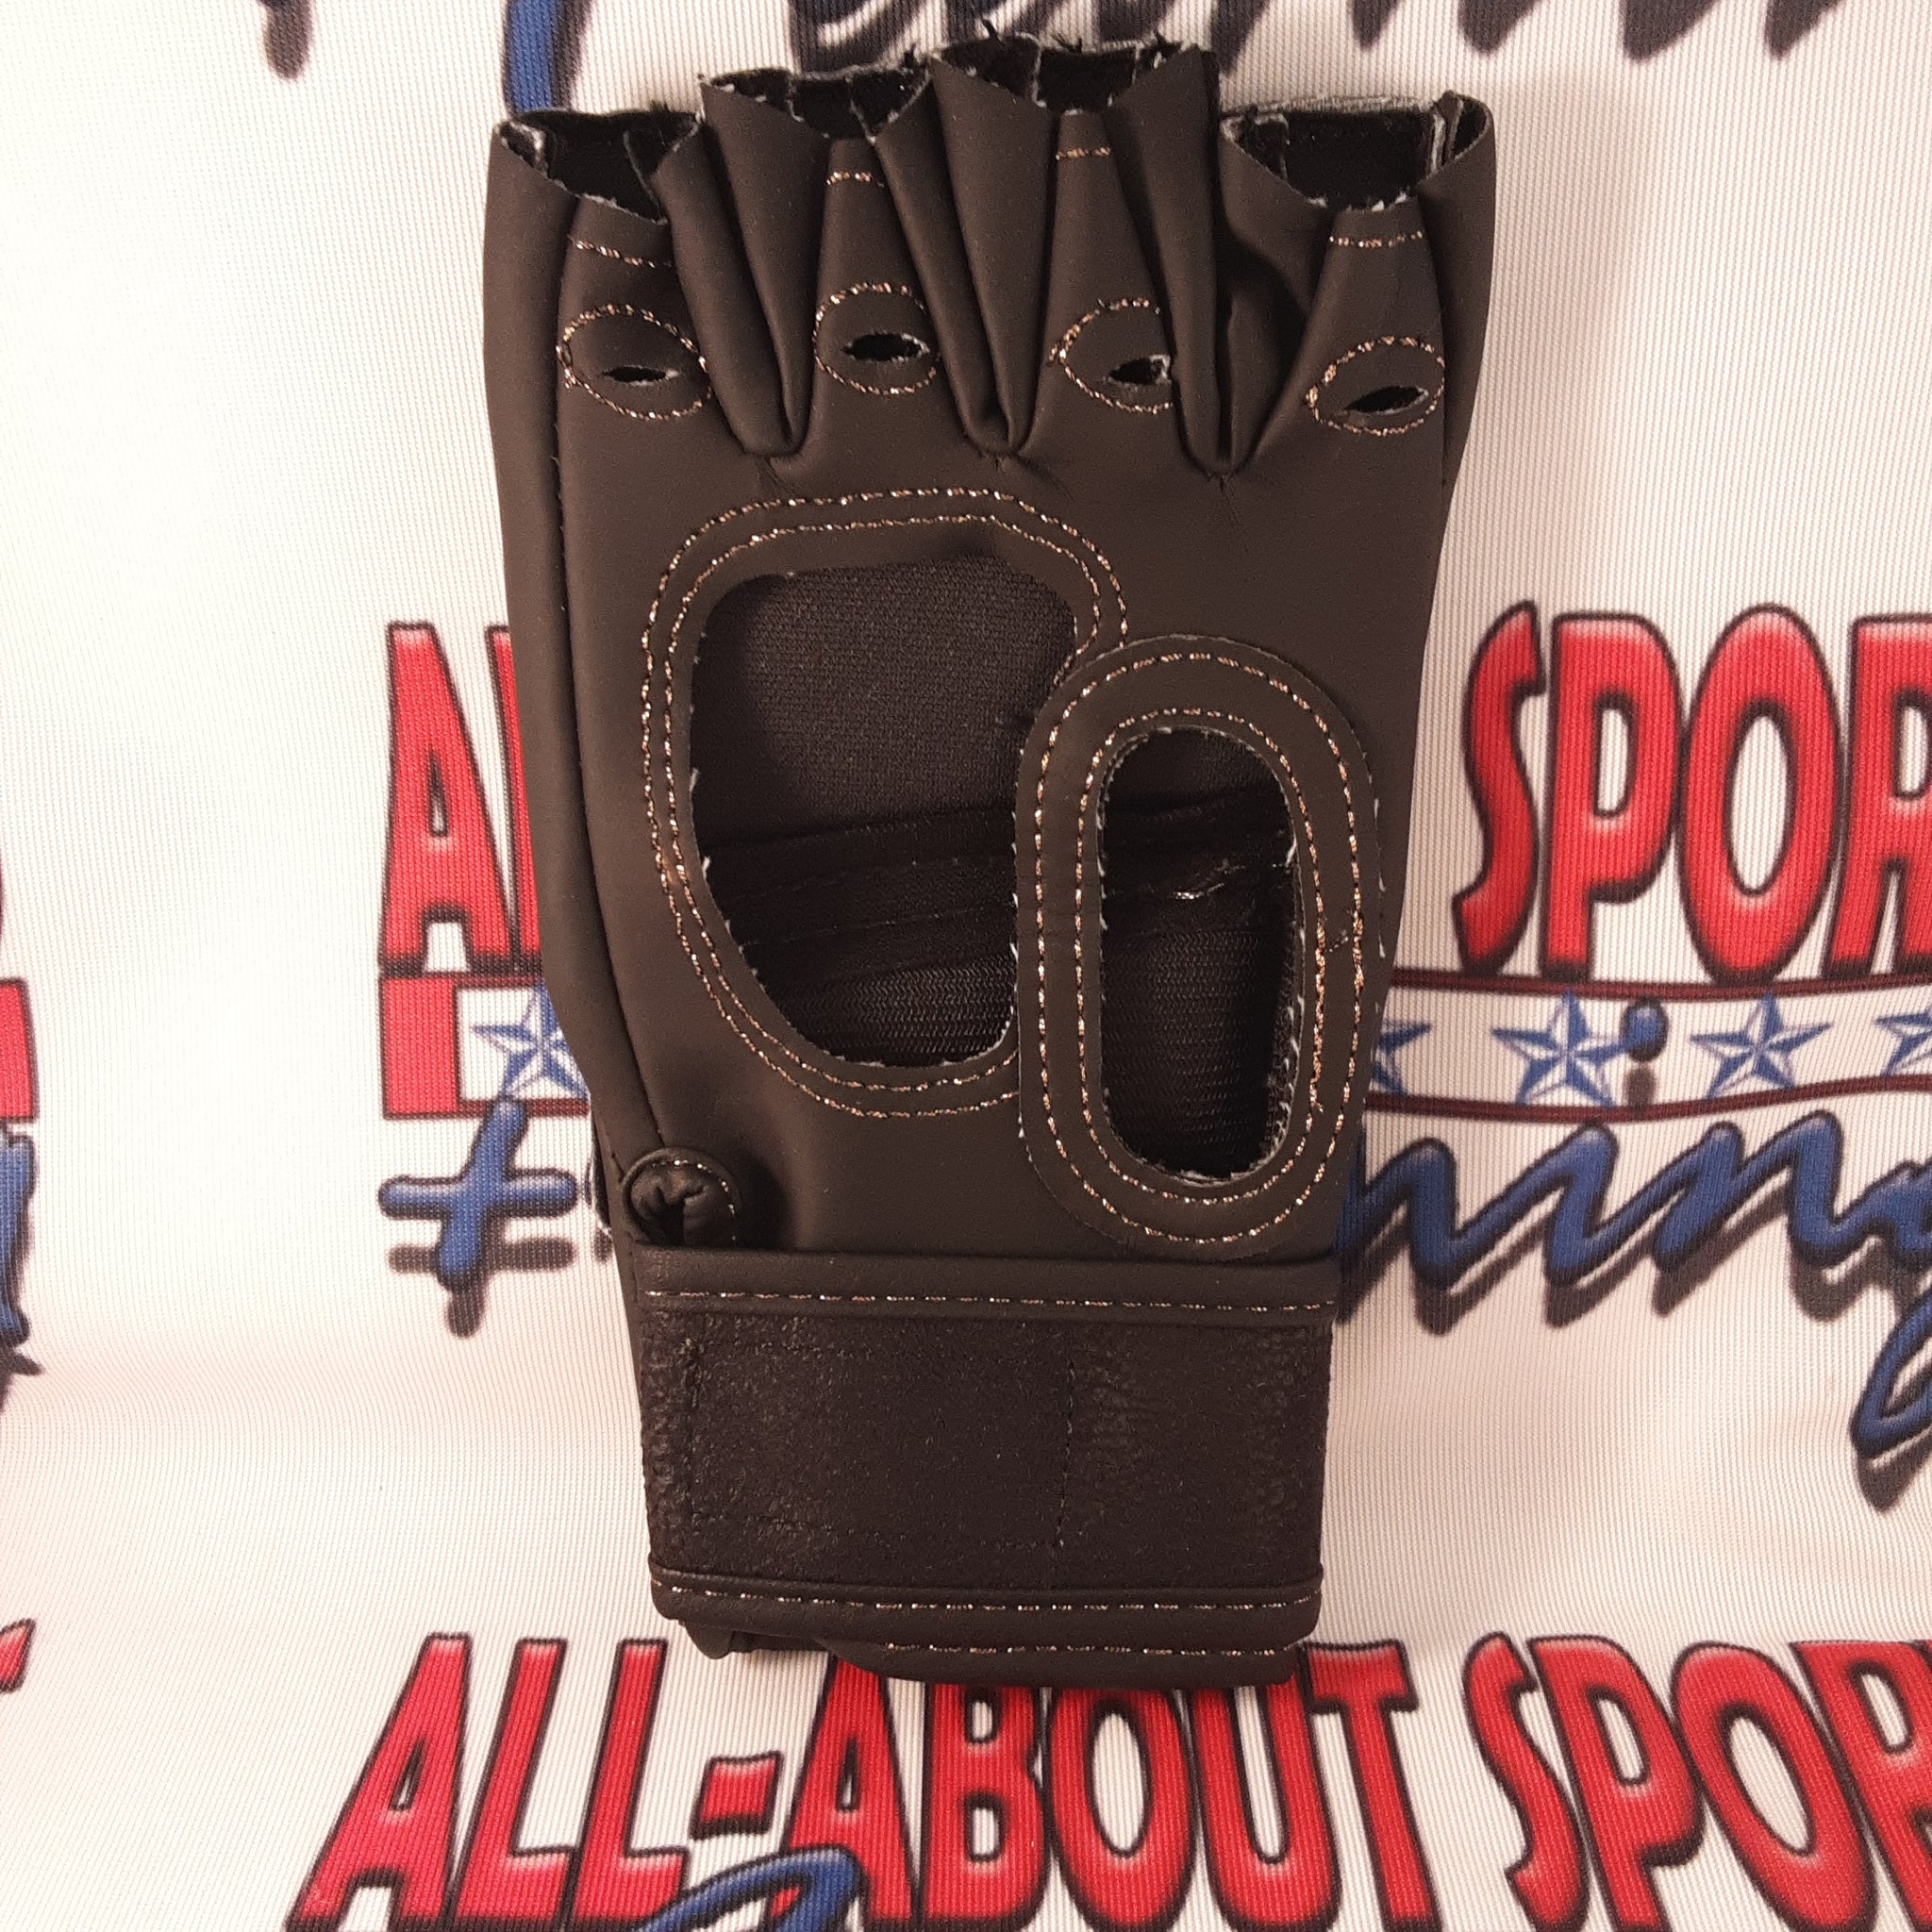 Cat Zingano Authentic Signed Autographed Boxing Glove JSA